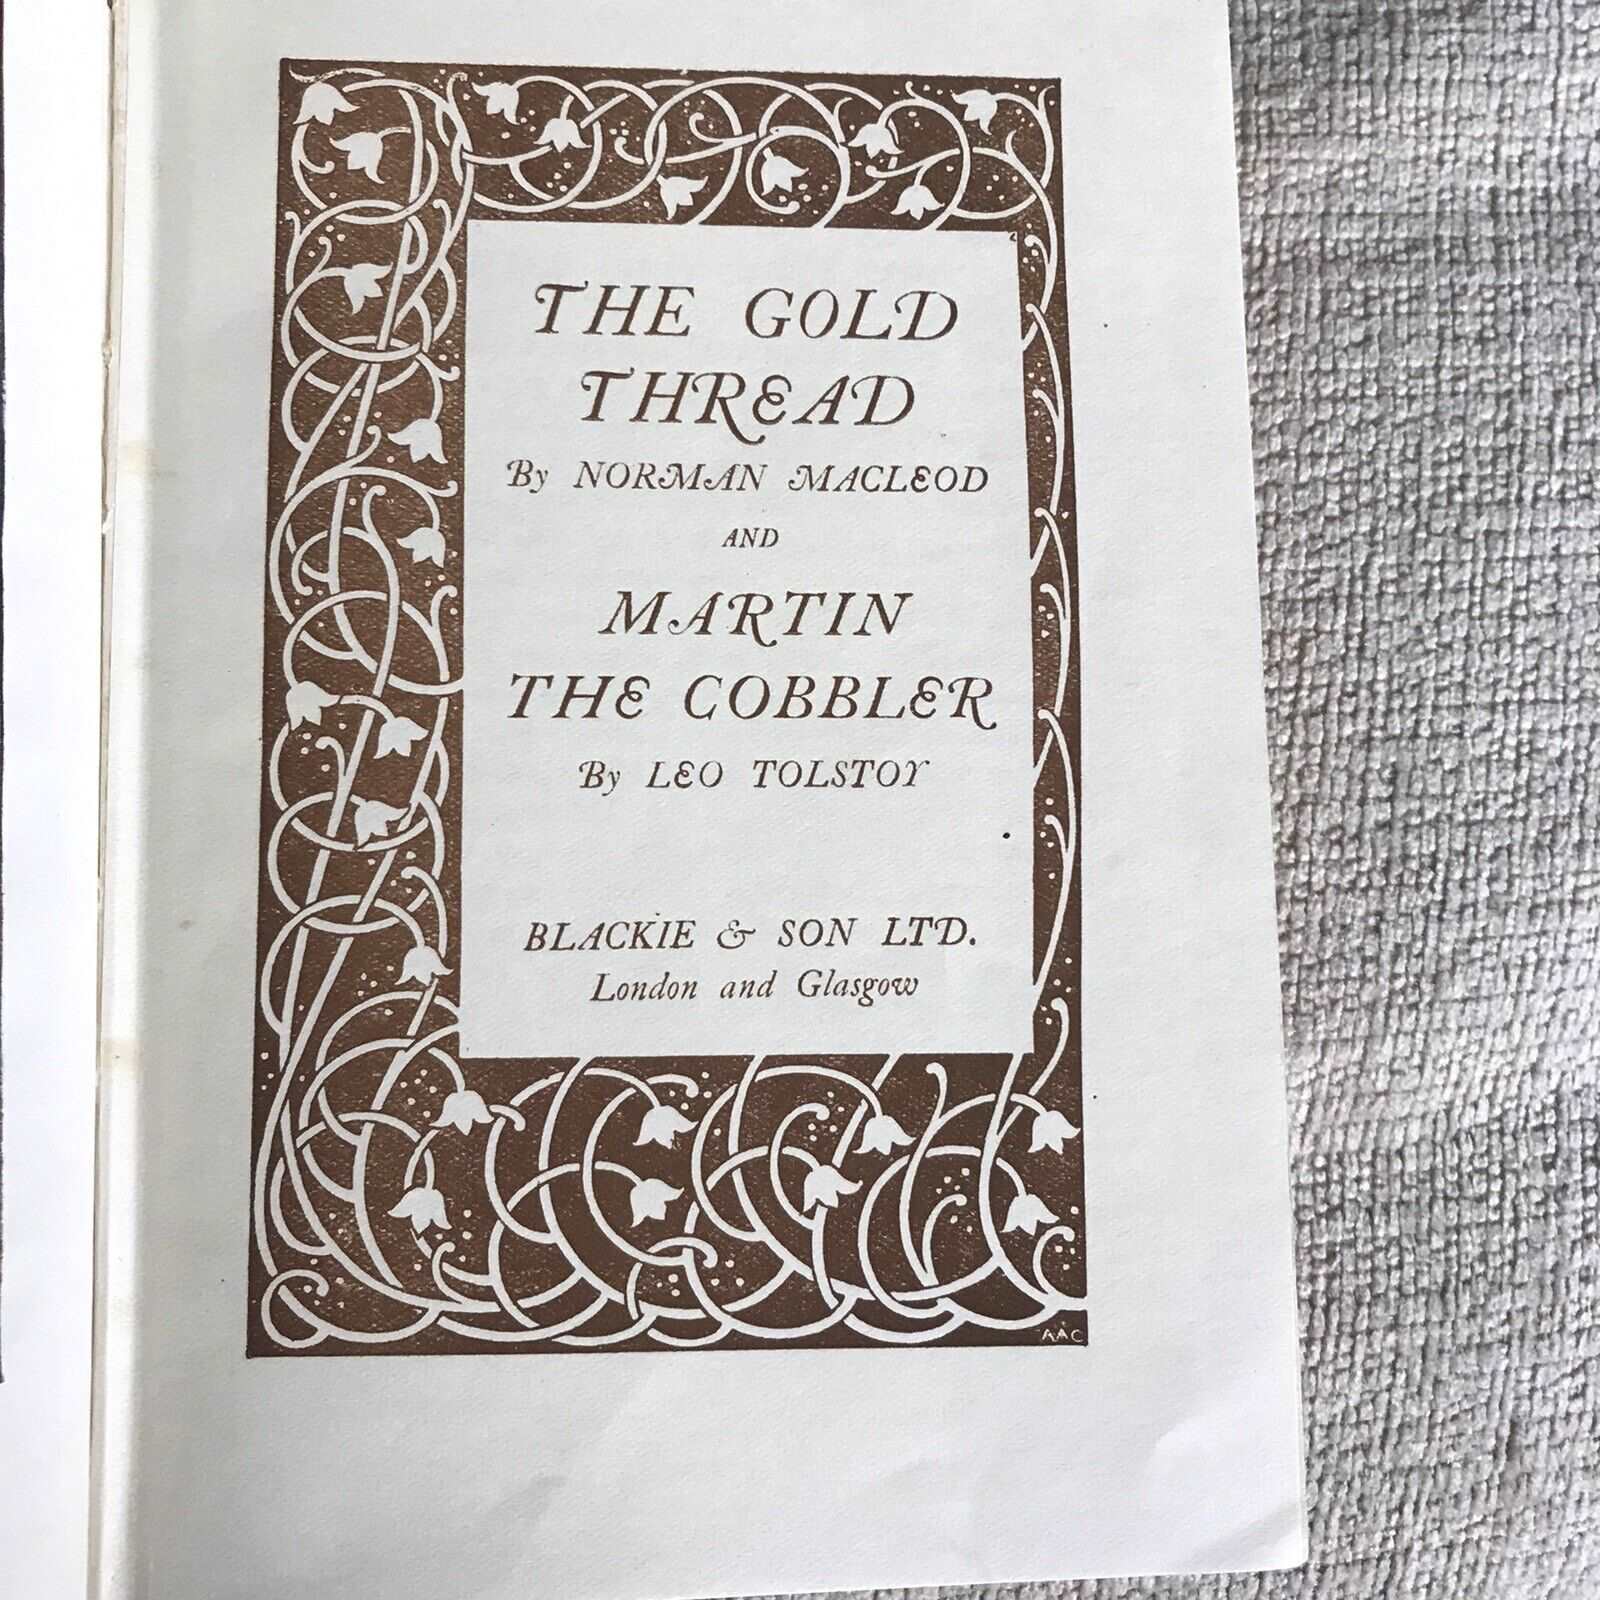 1913 The Gold Thread - Norman Macleod & Martin The Cobbler - Leo Tolstoy Honeyburn Books (UK)